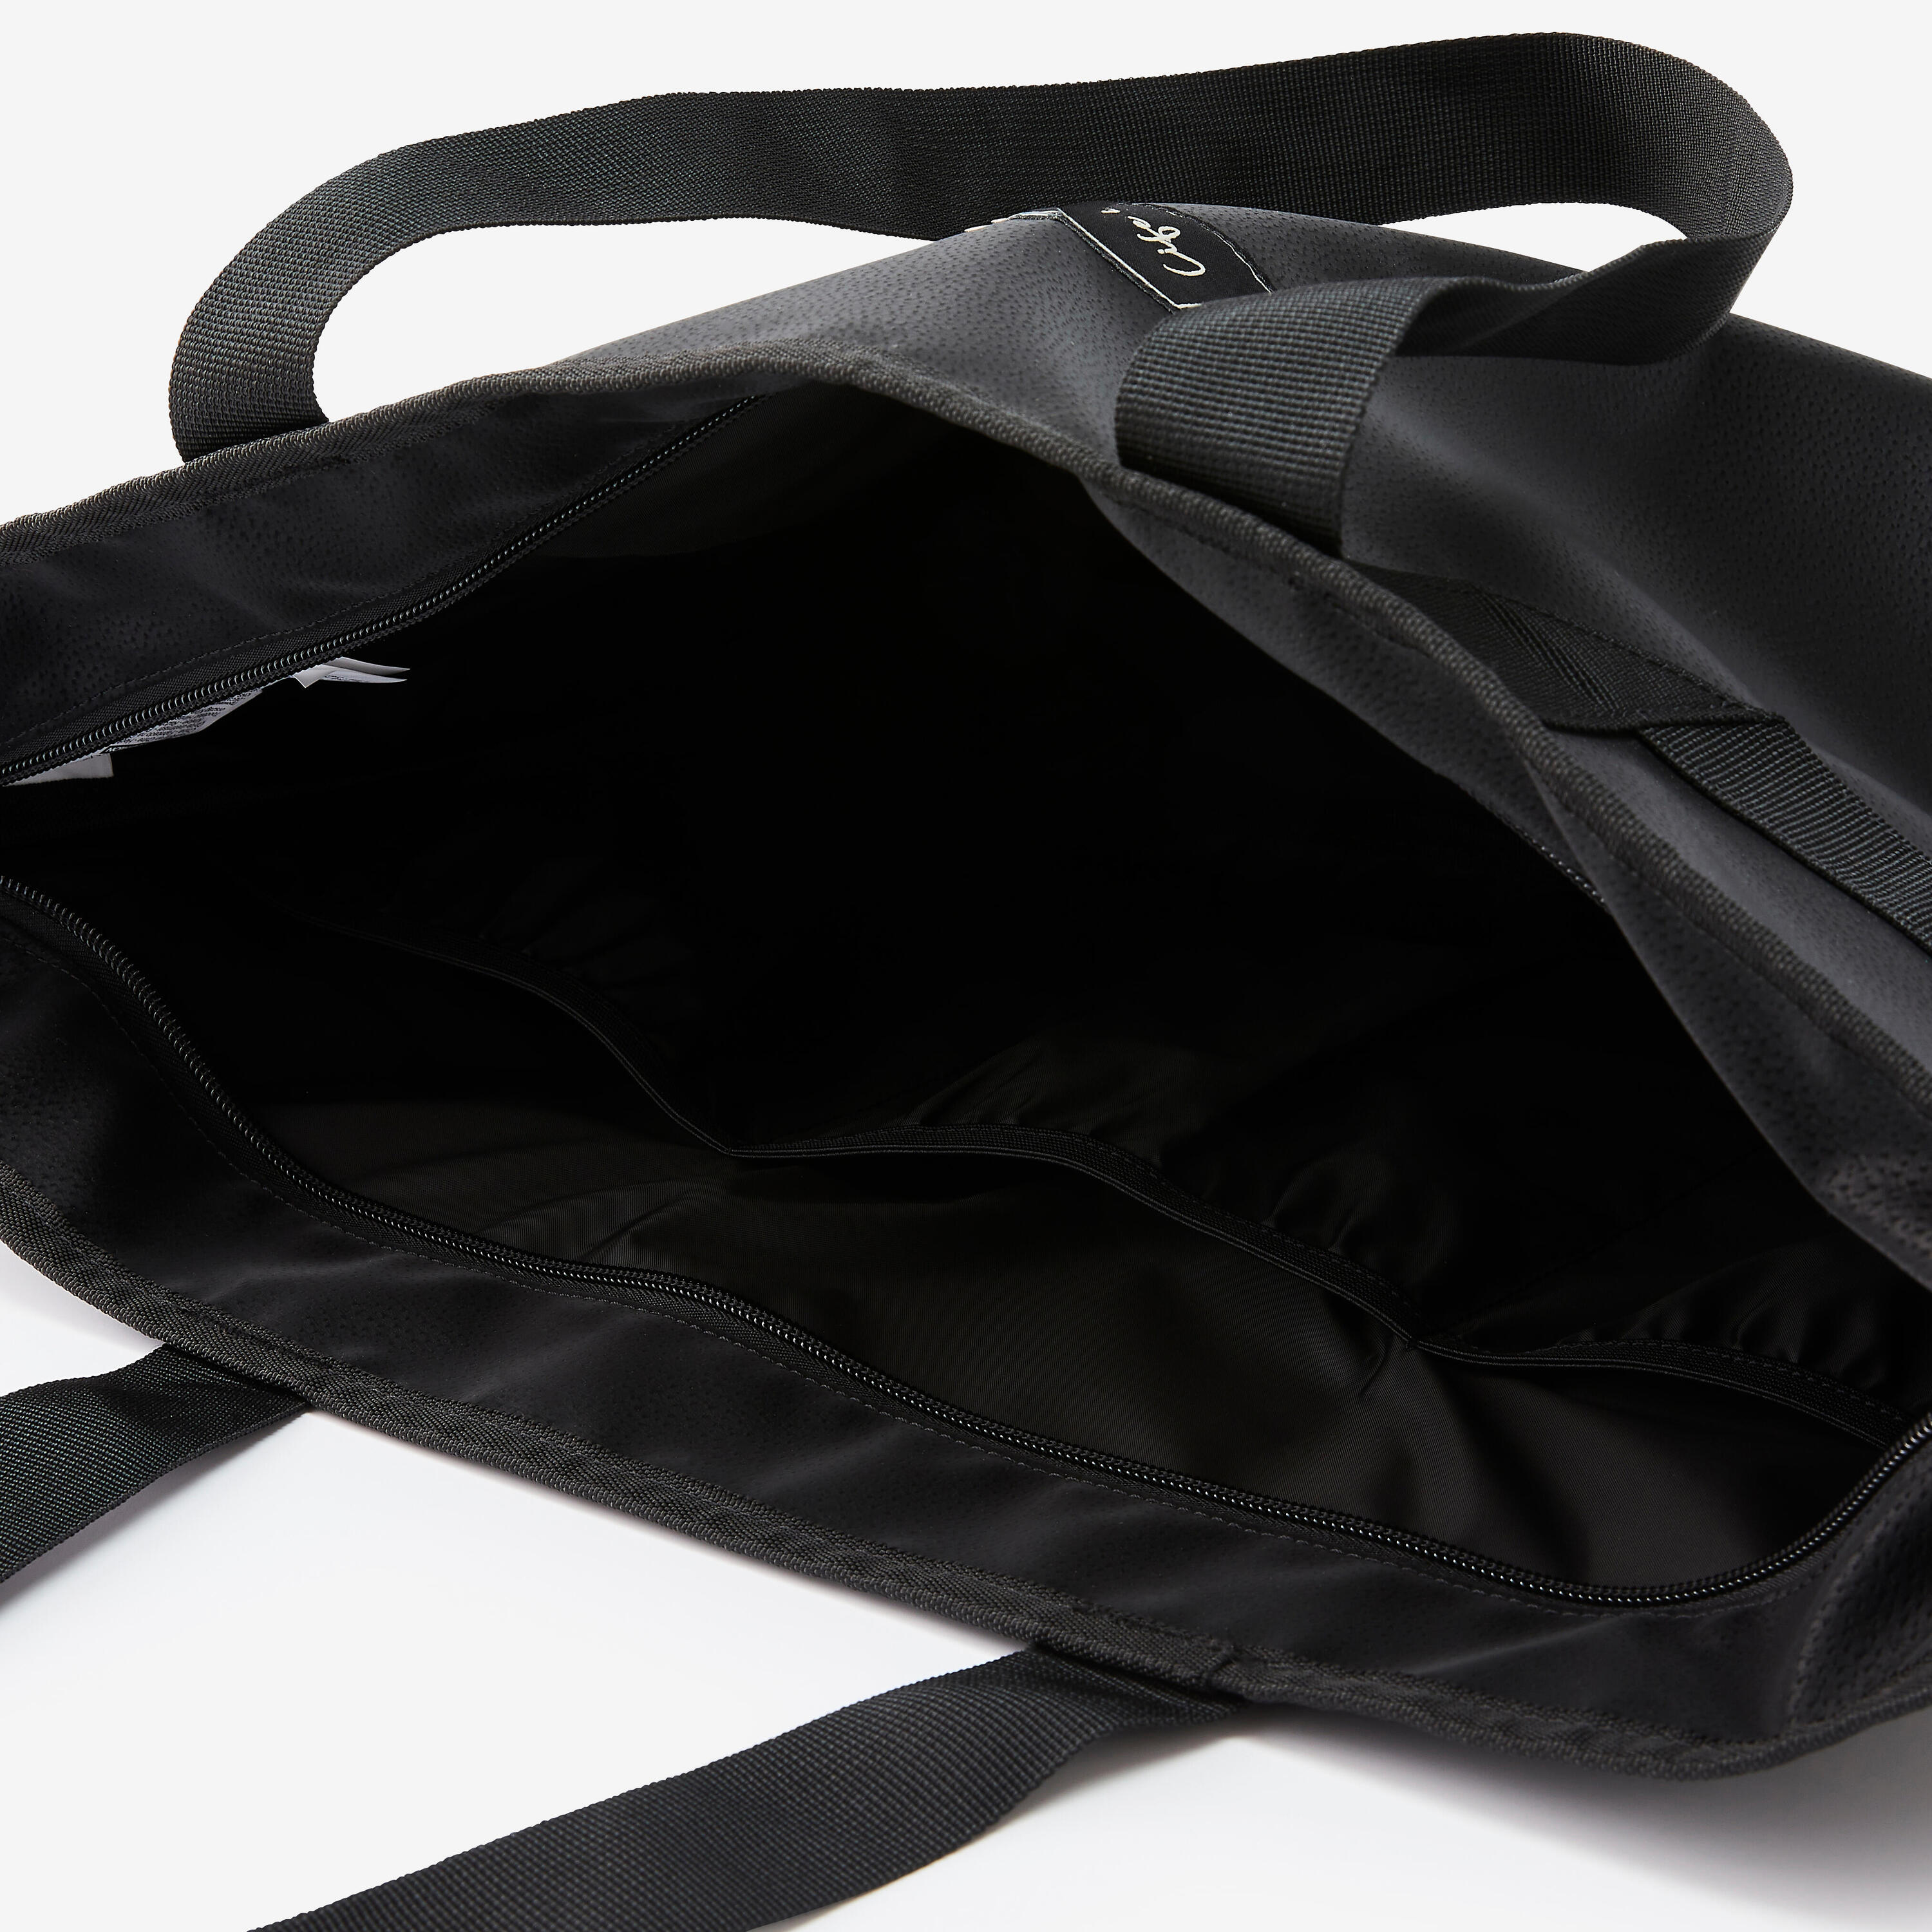 25 L Leather Look Sport Tote Bag - Black 4/6